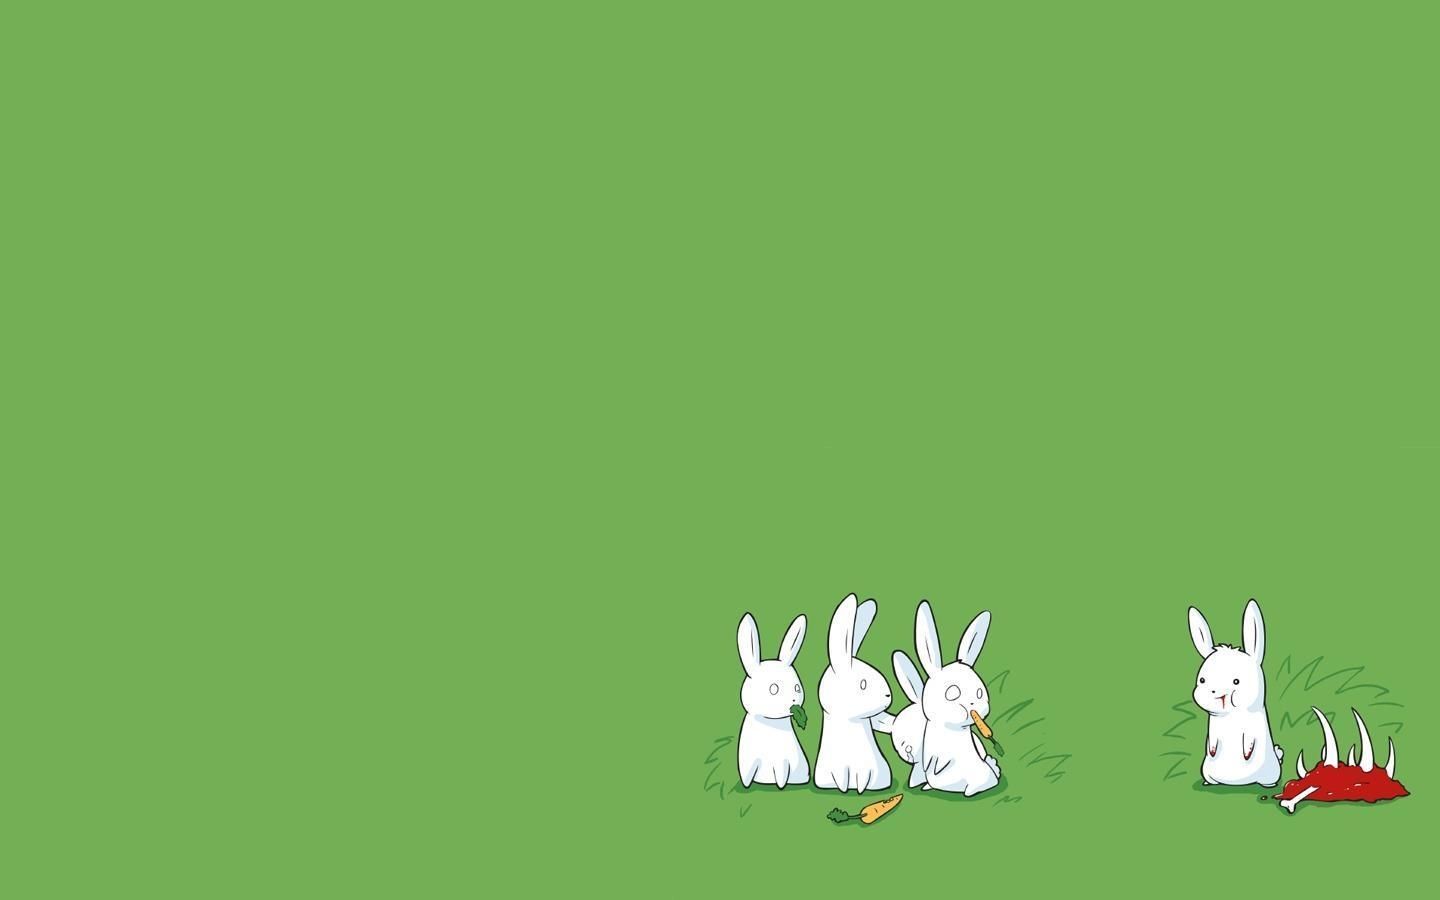 Download Wallpaper, Download bunnies cartoons minimalistic funny simple background Wallpaper –Free Wallpaper Download